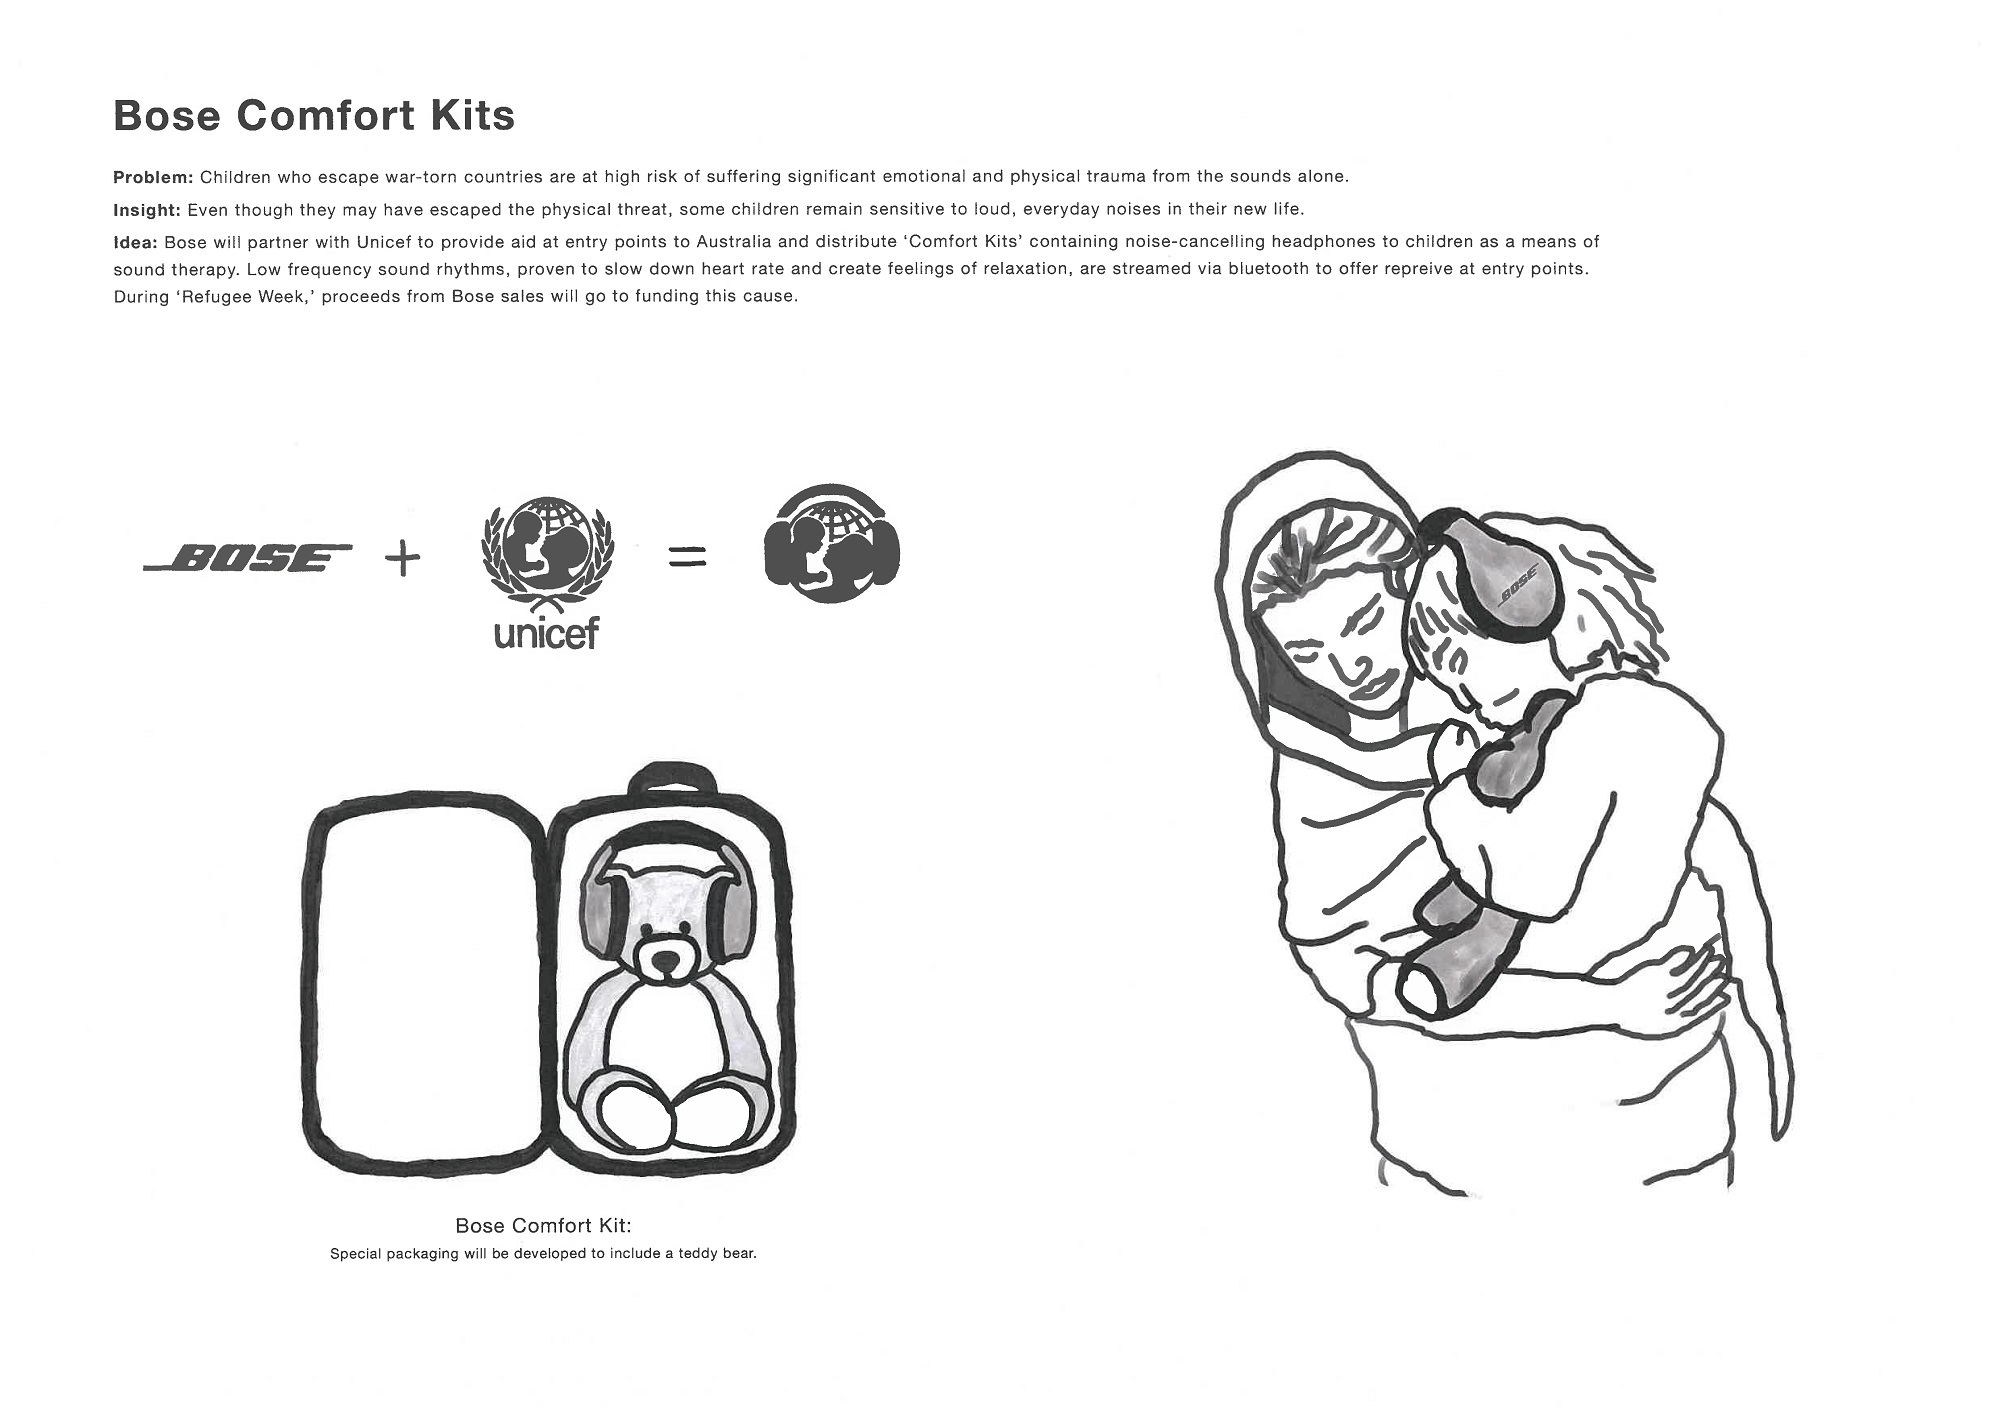 Bose Comfort Kits (Edward King)